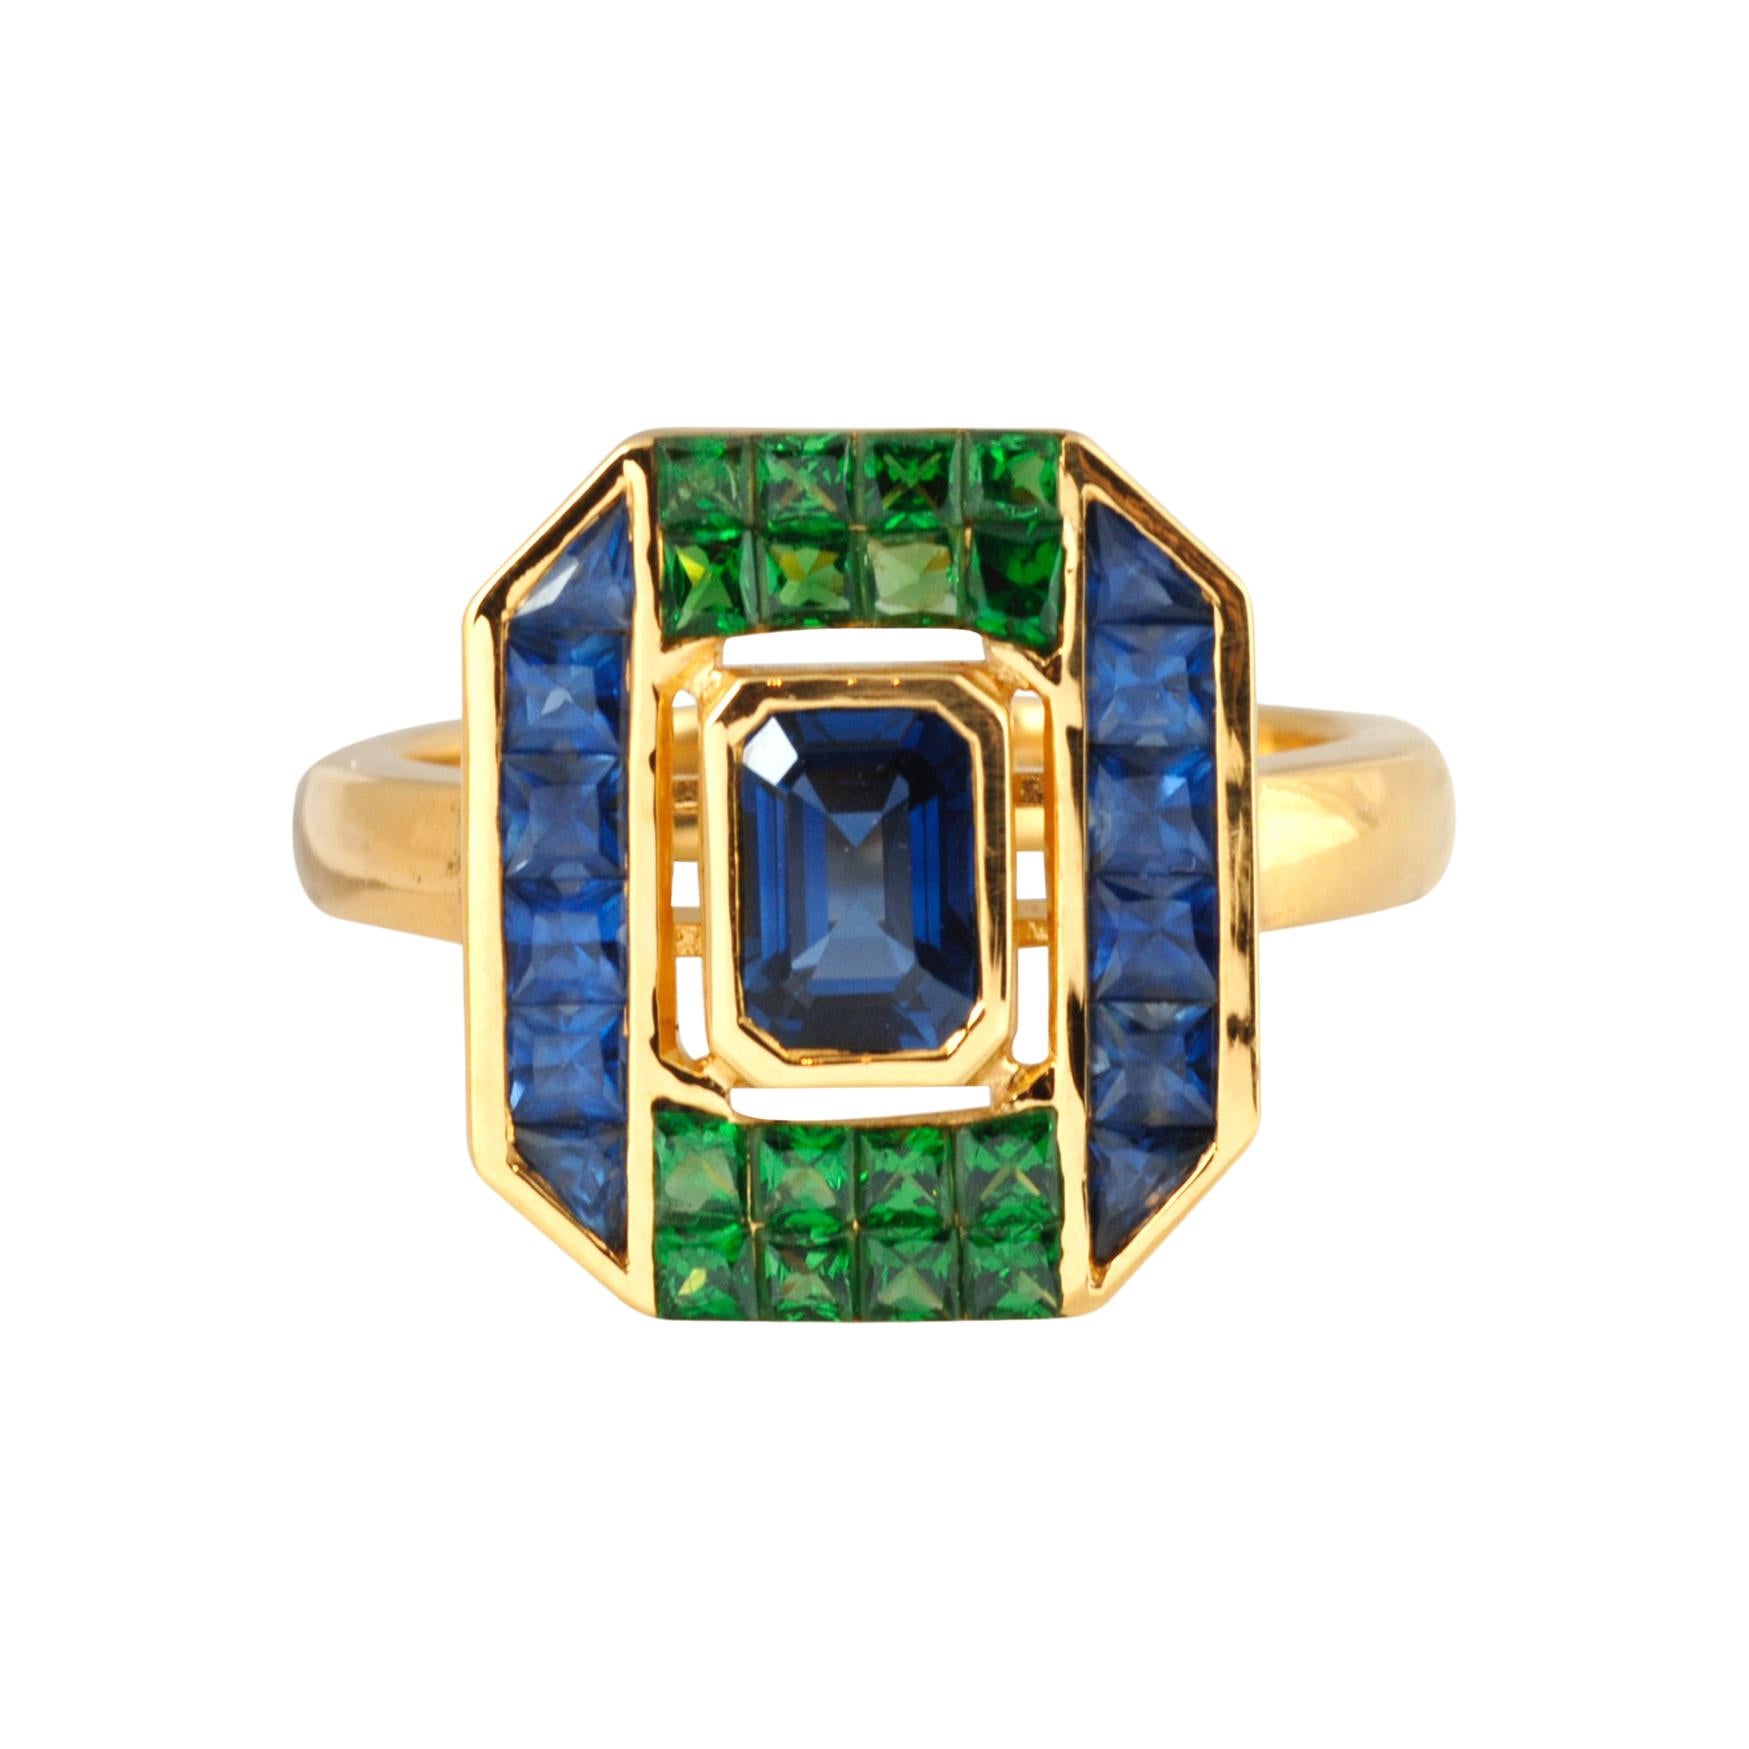 Blue Sapphire & Tsavorite Garnet Ring 18k Gold by Kavant & Sharart